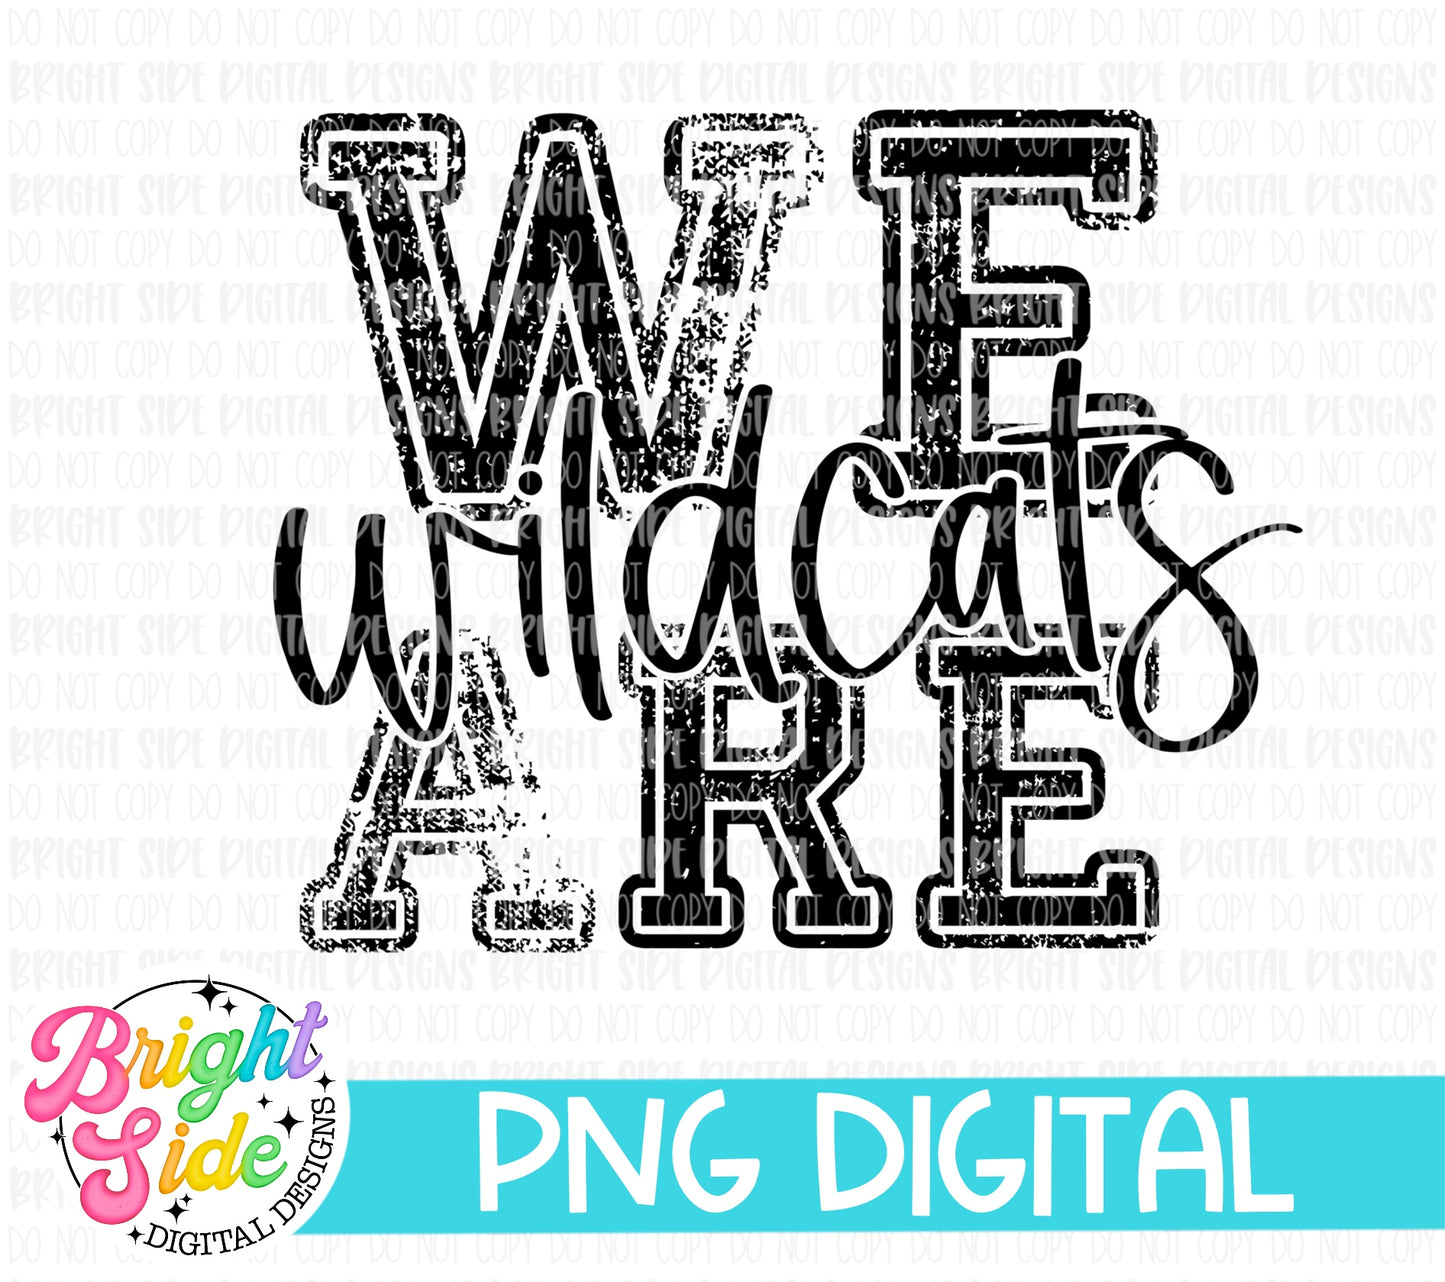 We Are Wildcats -single color school mascot design